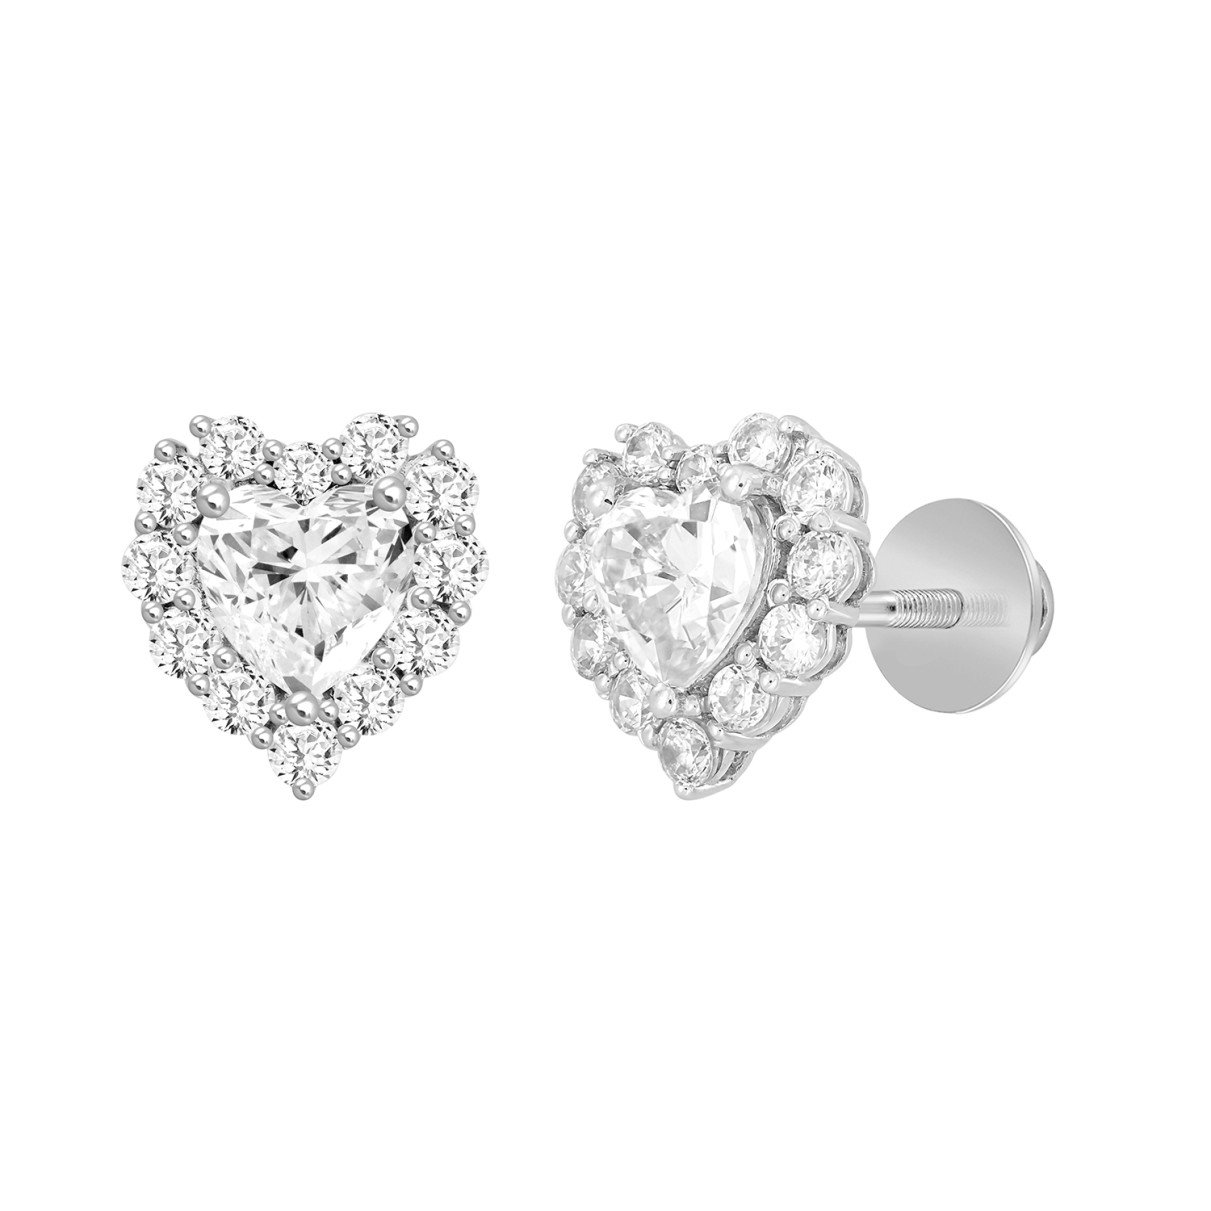 LADIES STUD EARRINGS  3CT HEART/ROUND DIAMOND 14K WHITE GOLD (CENTER STONE HEART DIAMOND 2CT )